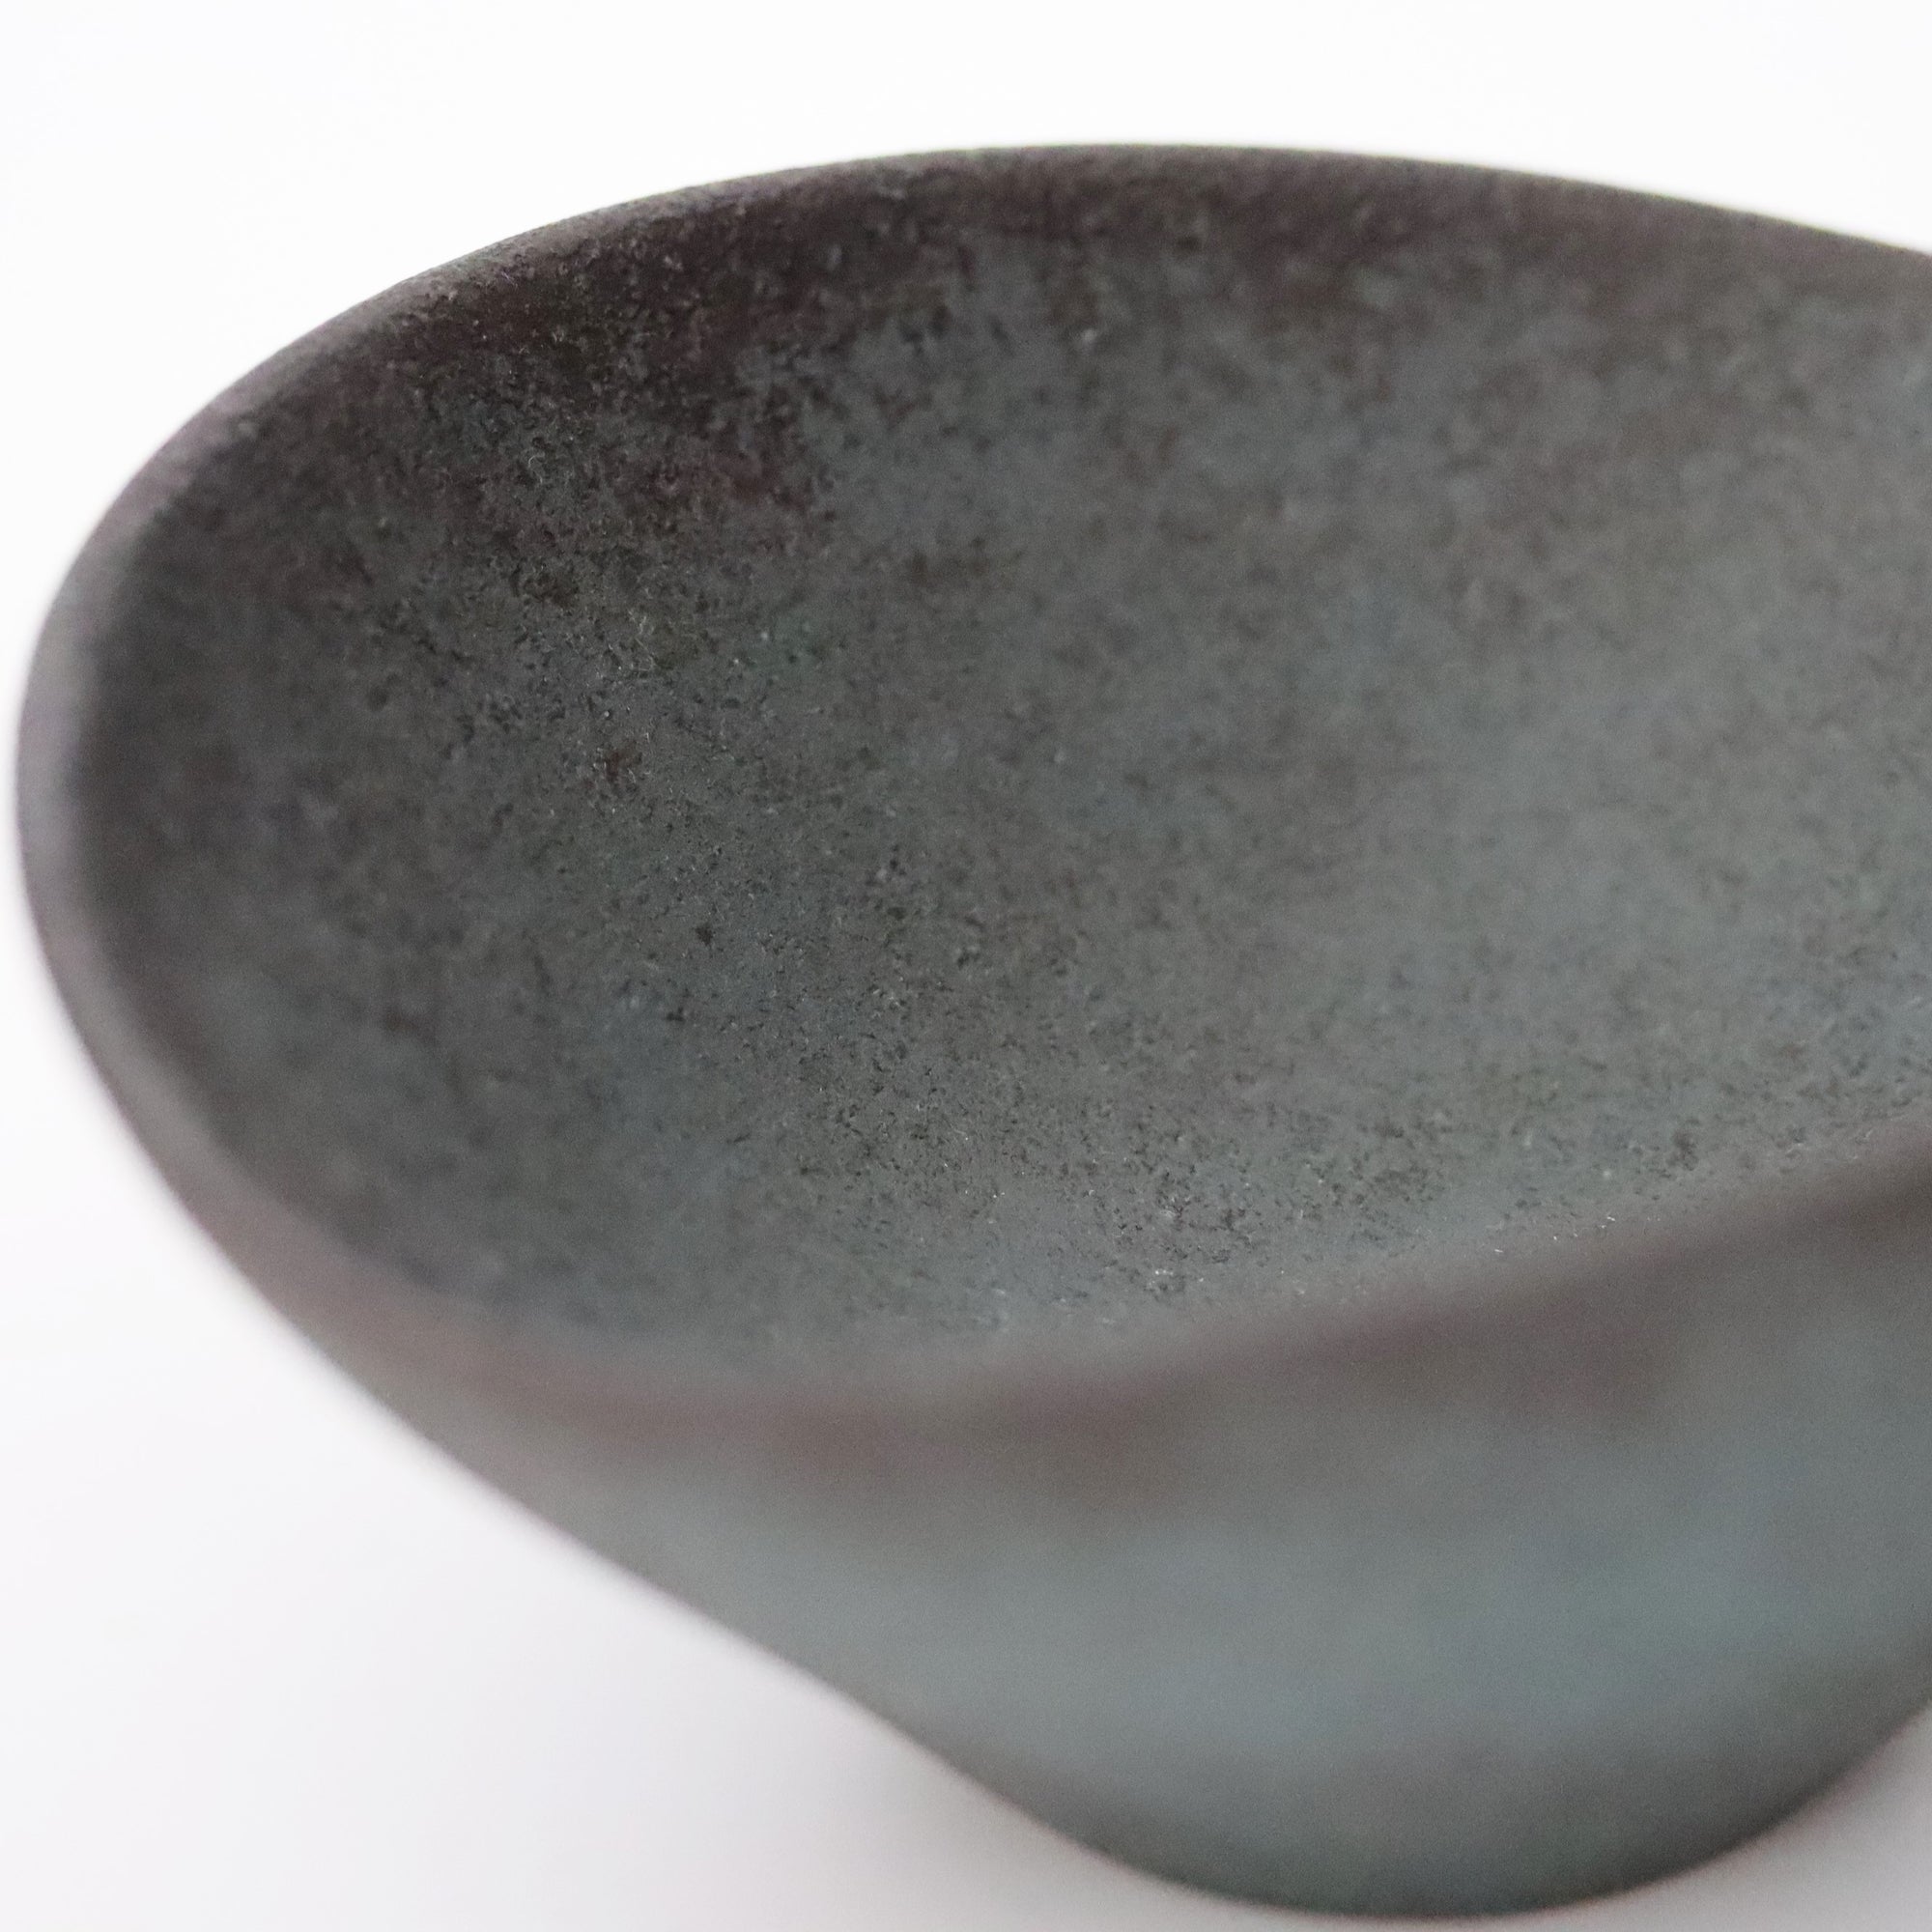 【Eiichi Shibuya】地ノ器 oval bowl verdigris blue